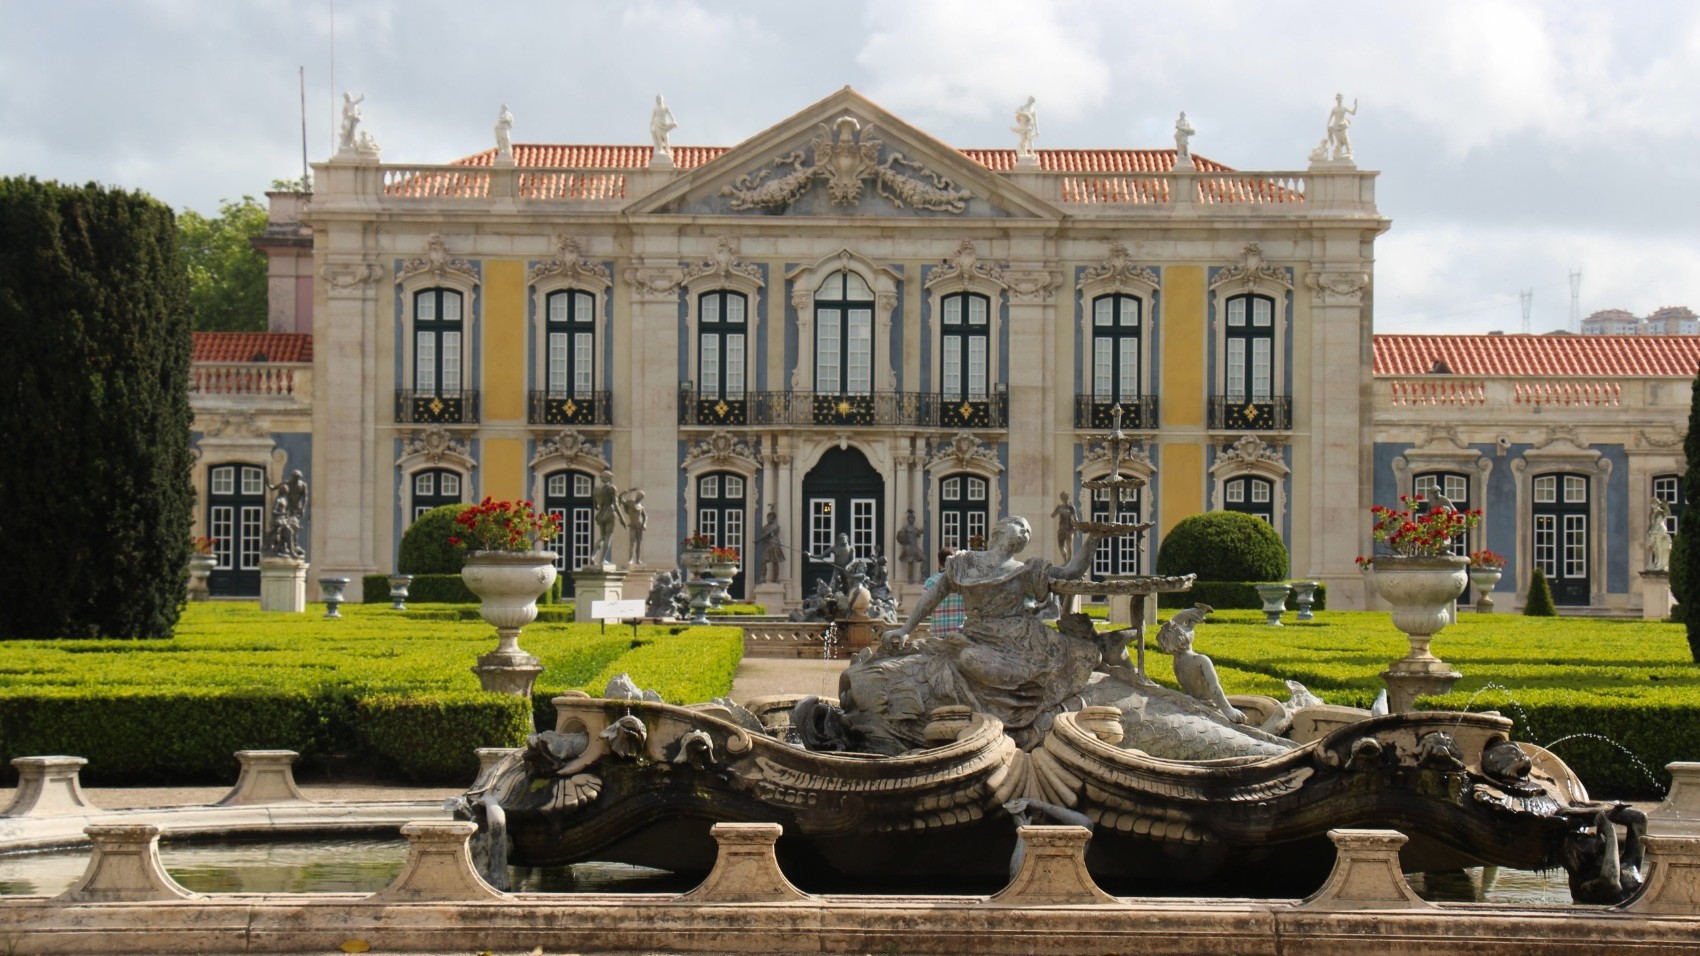 Lisbon-&-Surroundings-with-Alentejo-World-Heritage-palace